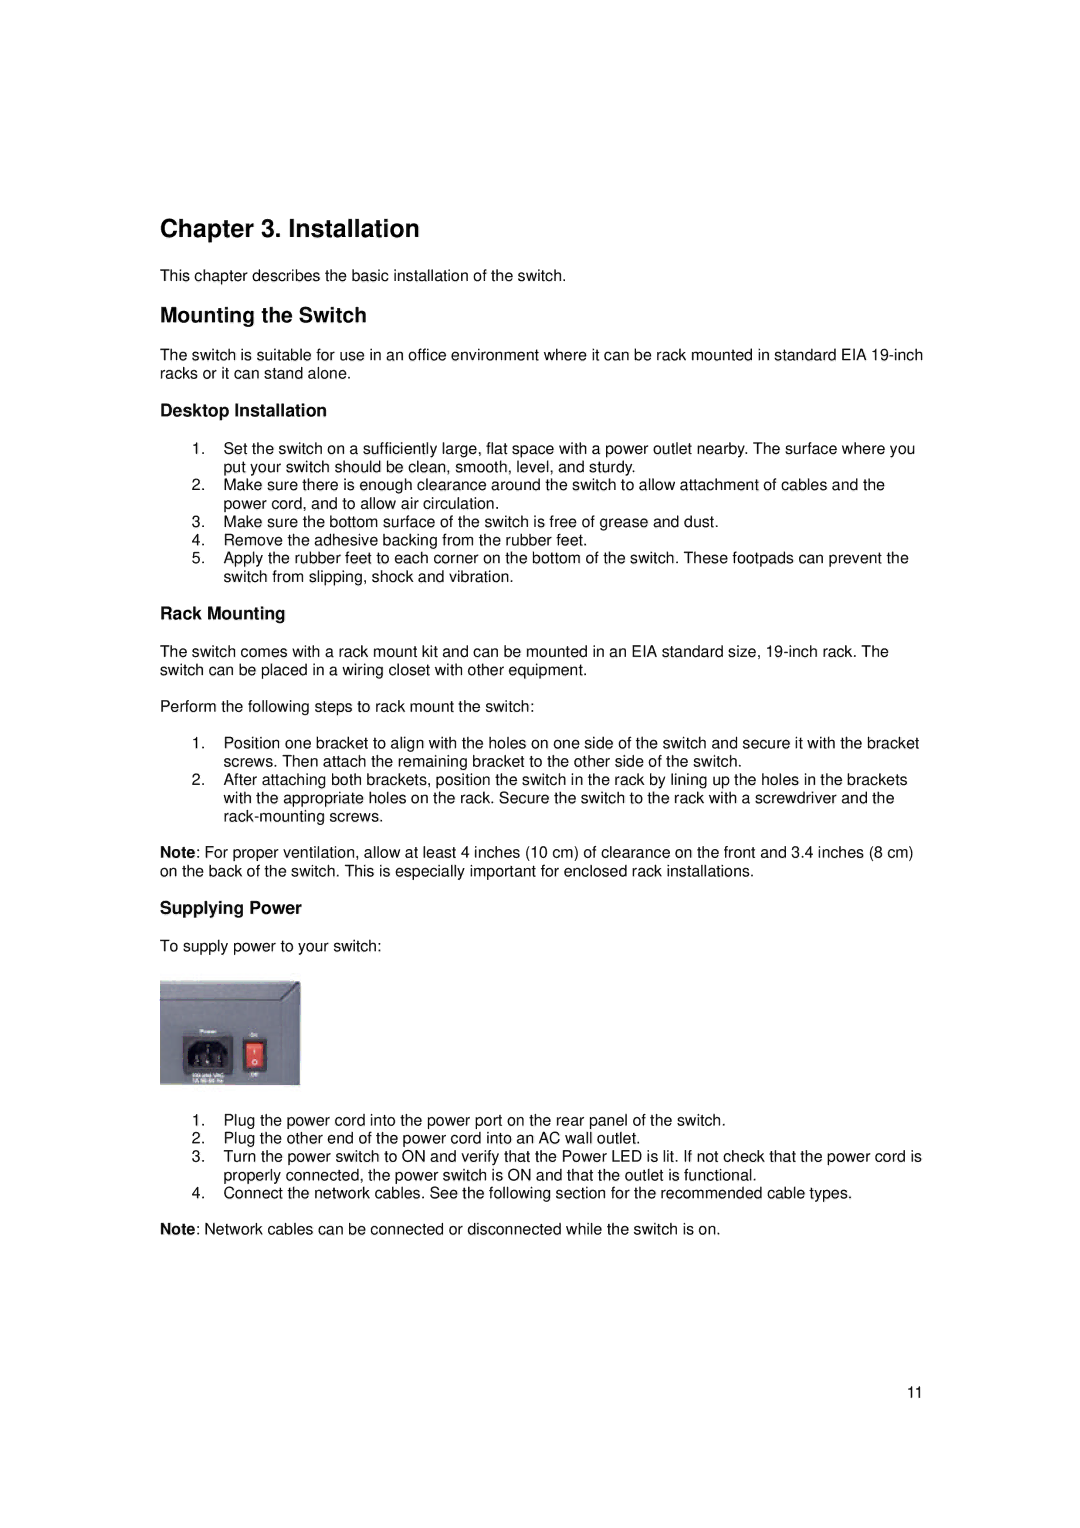 Asante Technologies FX4000 user manual Mounting the Switch, Desktop Installation, Rack Mounting, Supplying Power 